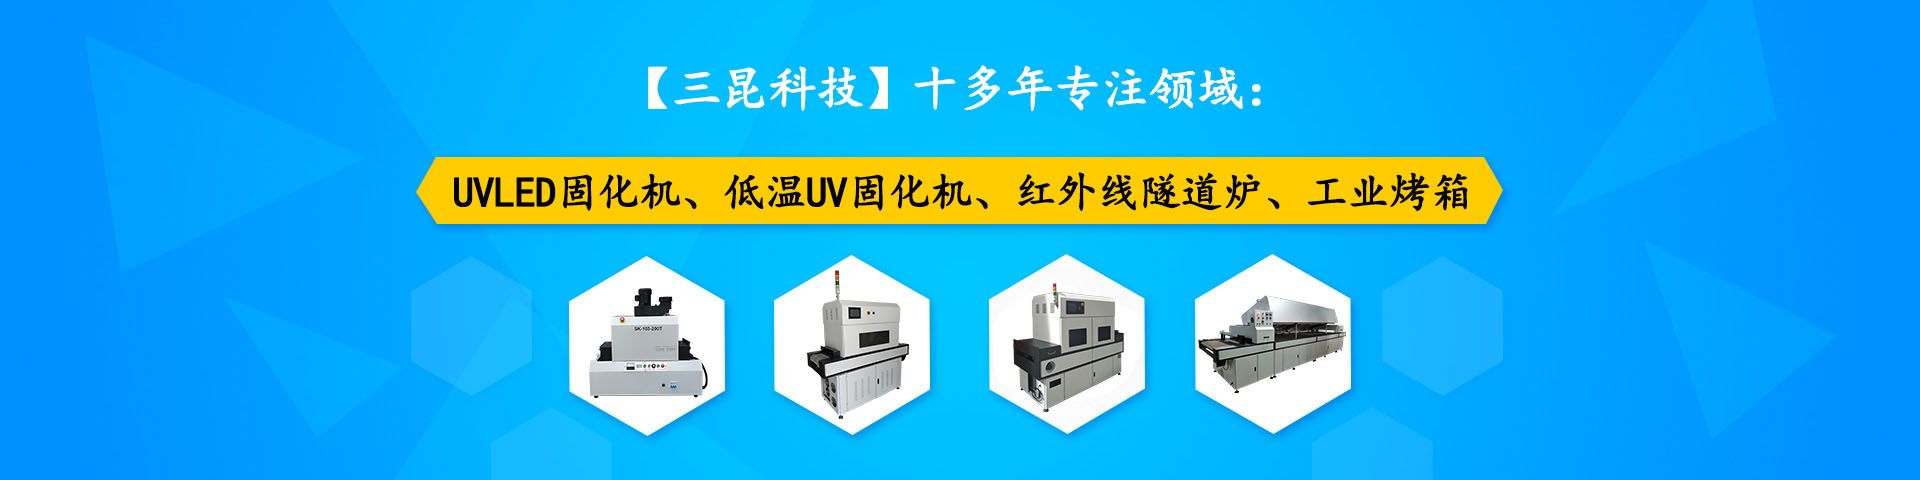 UV照射机生产厂家之三昆科技